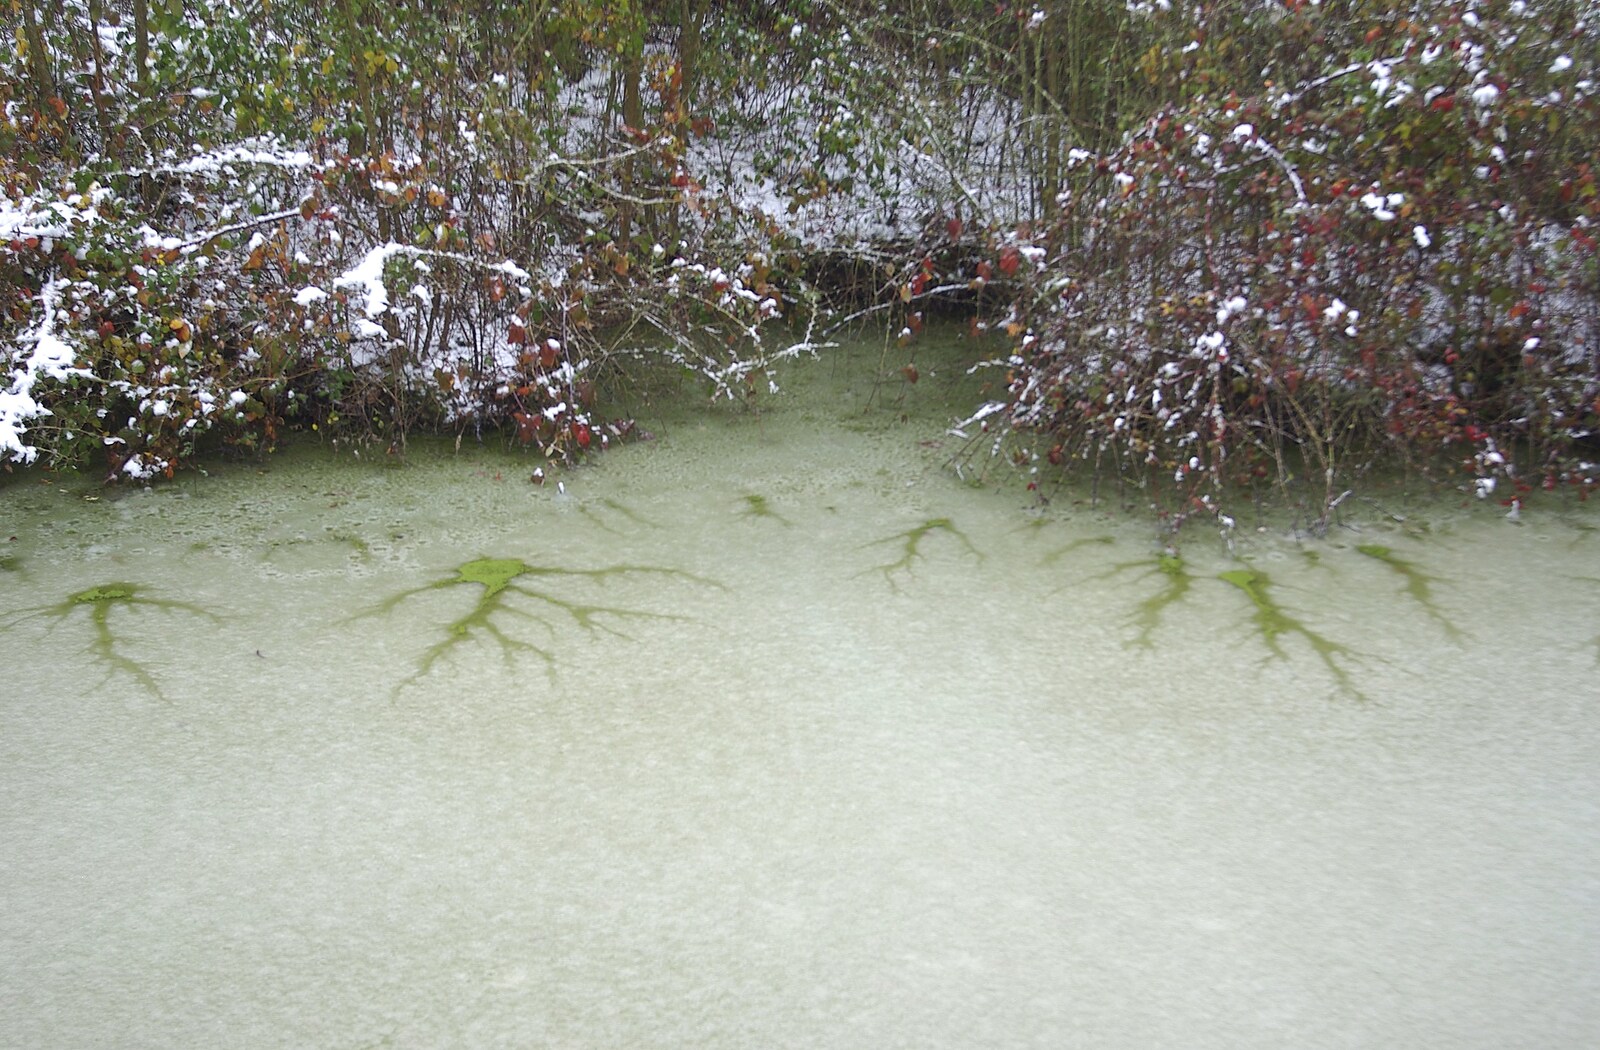 Snow Days, Brome, Suffolk - 22nd November 2008: Strange green formations on a frozen pond